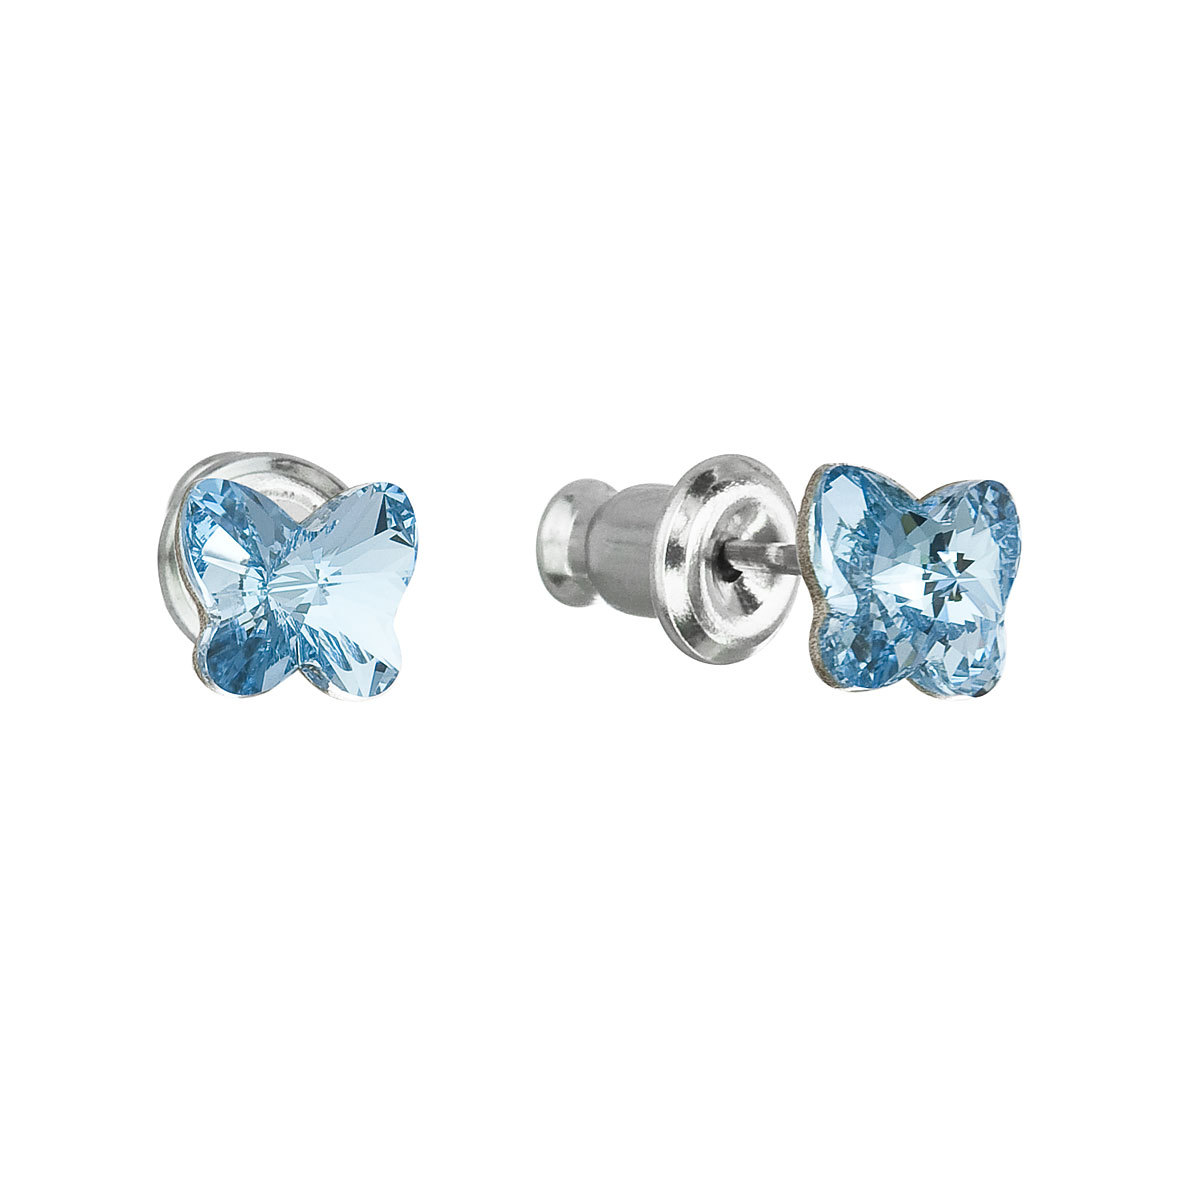 Evolution Group Náušnice se Swarovski krystaly modrý motýl 51049.3 aqua